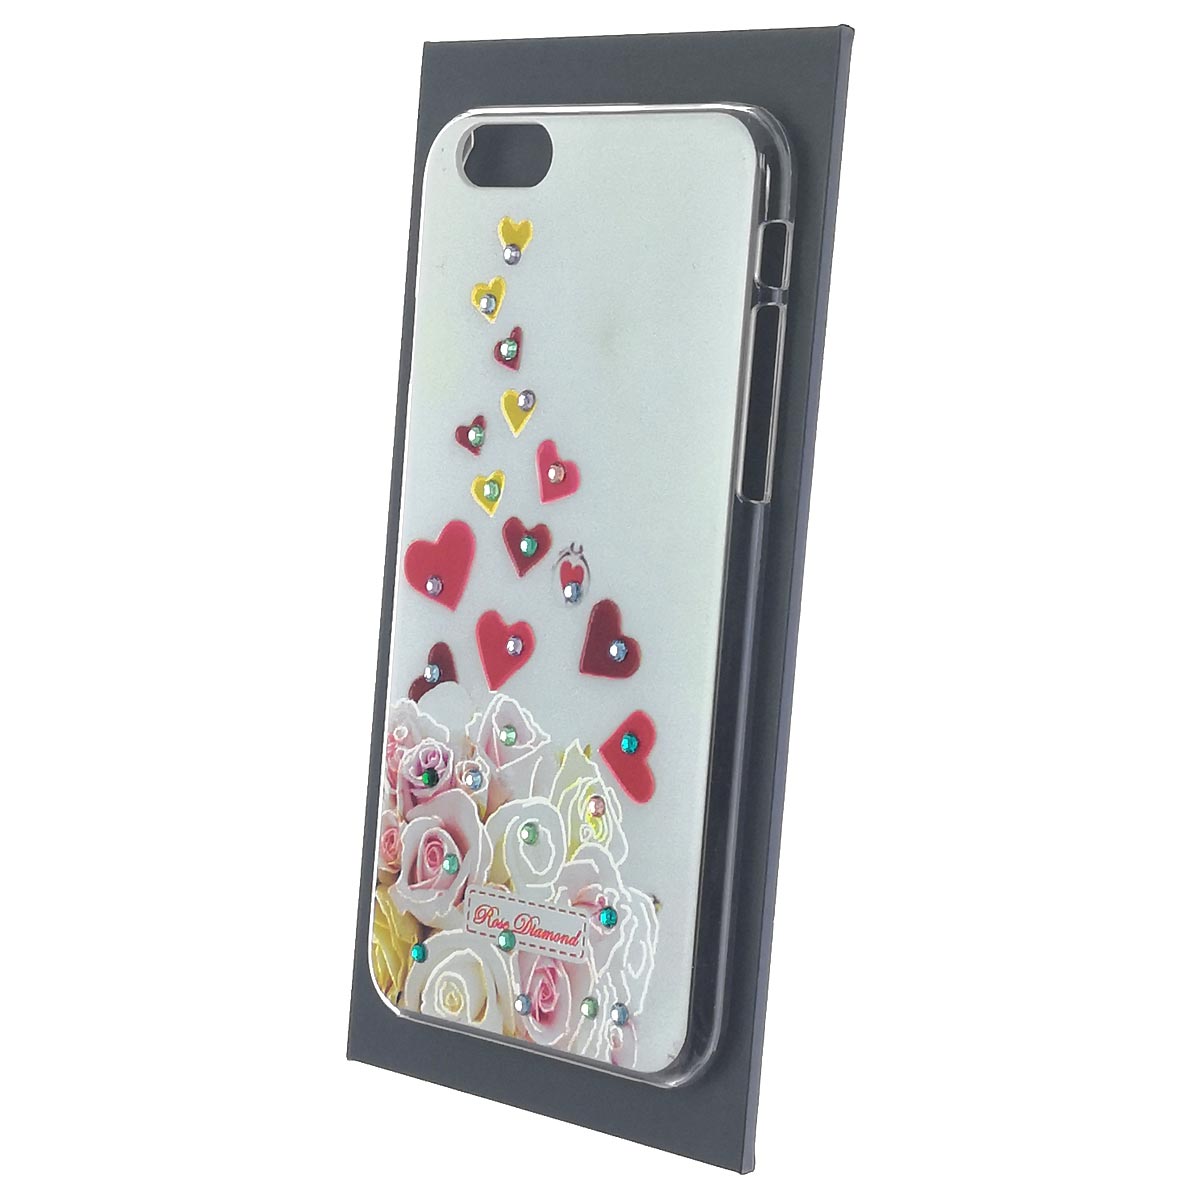 Чехол накладка для APPLE iPhone 6, iPhone 6G, iPhone 6S, пластик, стразы, рисунок розы и сердечки